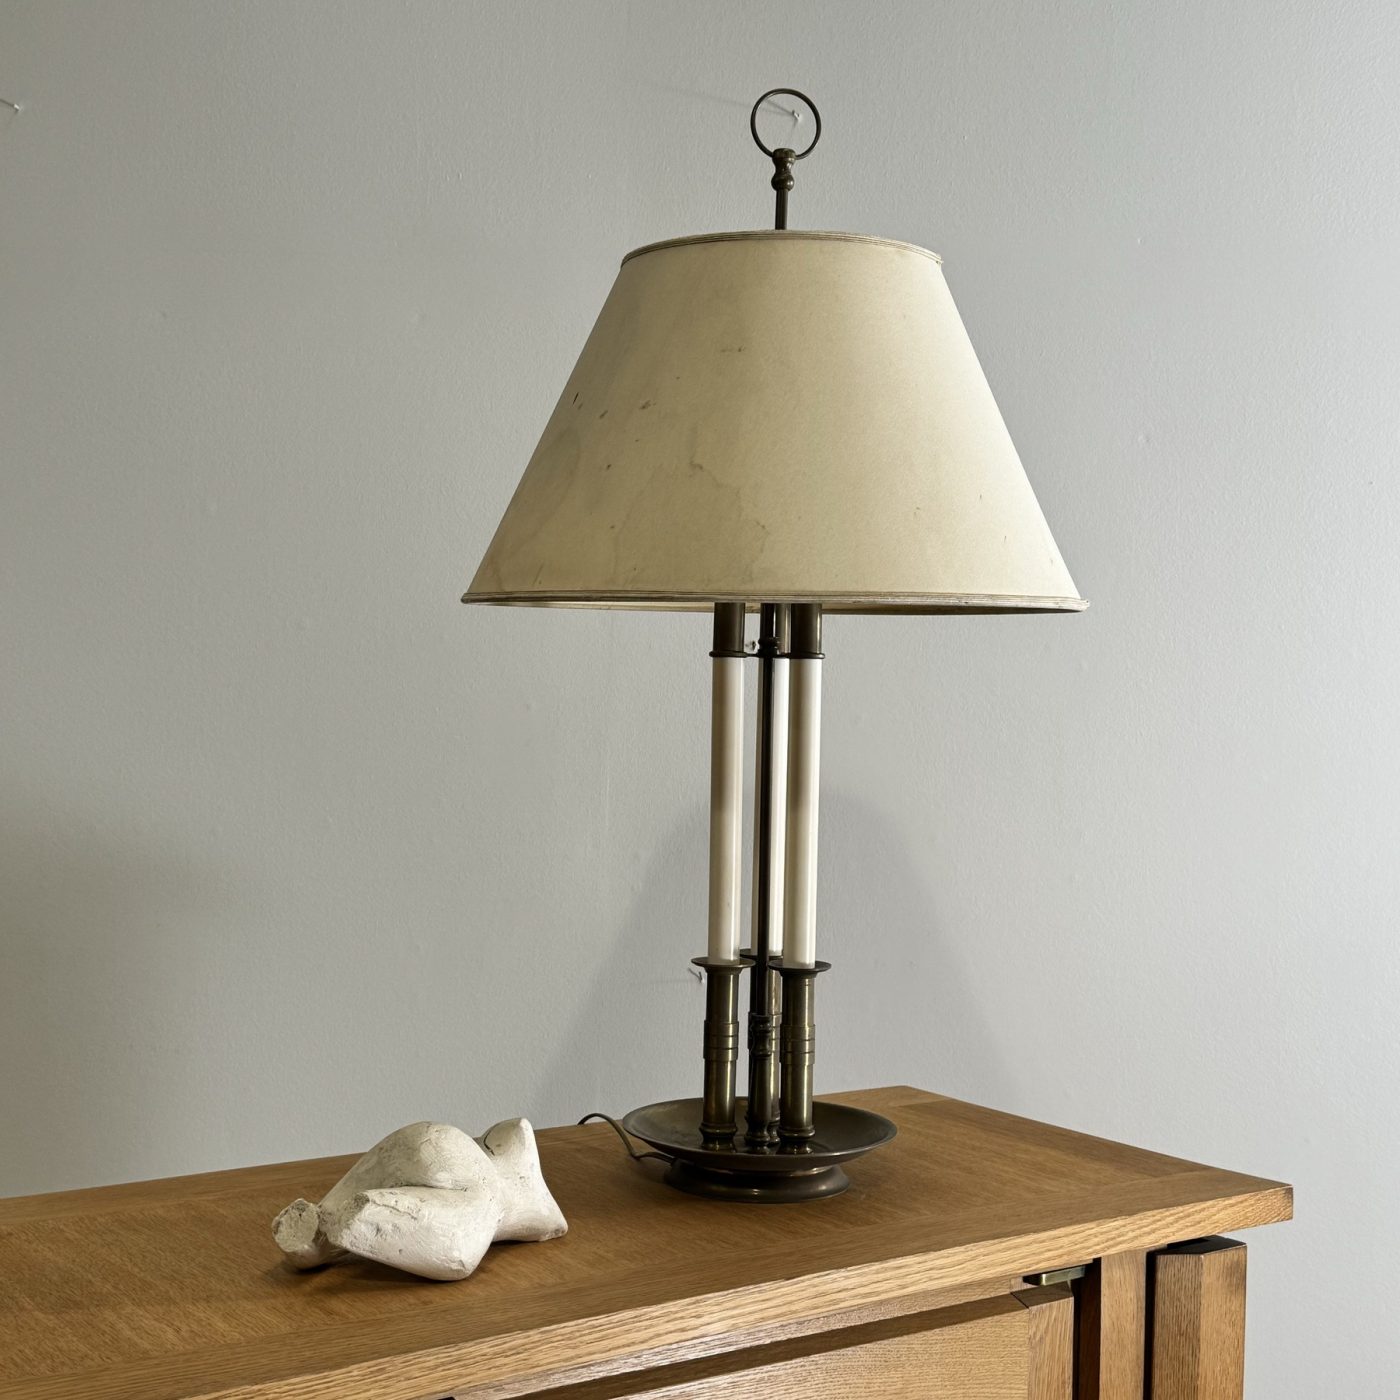 objet-vagabond-1950-lamp0002